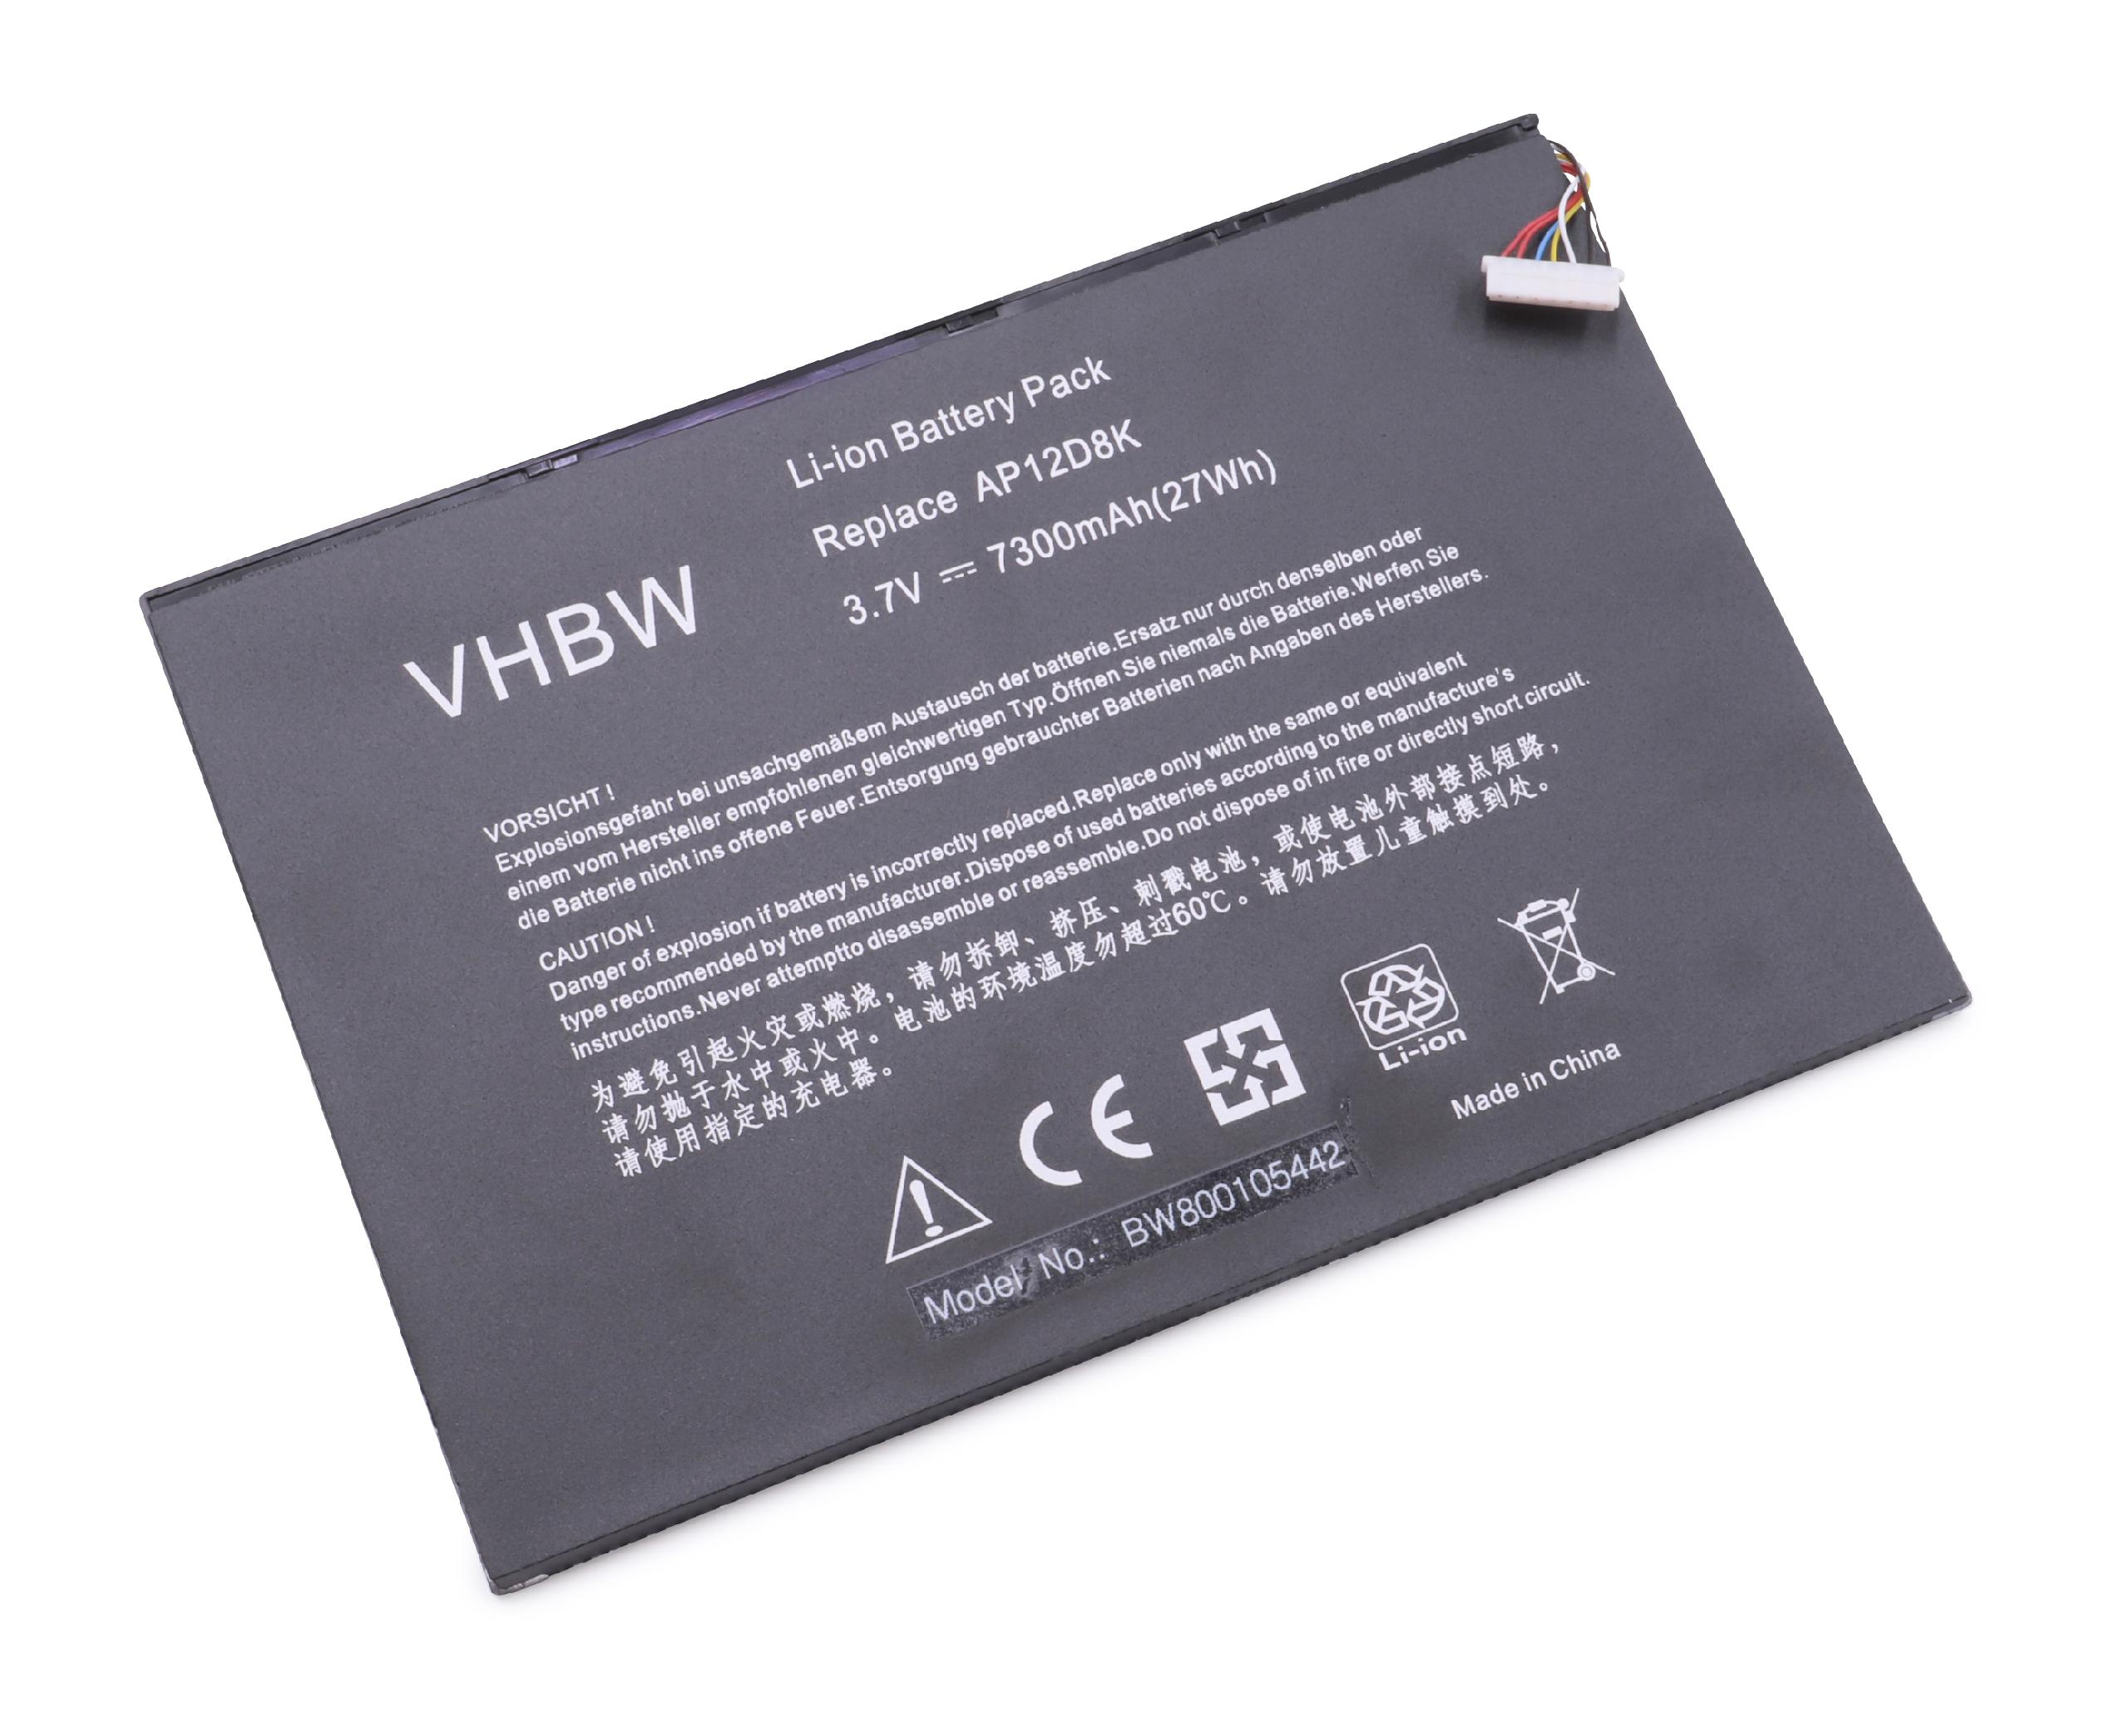 VHBW Ersatz für Acer 3.7 Li-Polymer mAh Volt, AP12D8K Akku, für 1ICP4/83/103-2, 7300